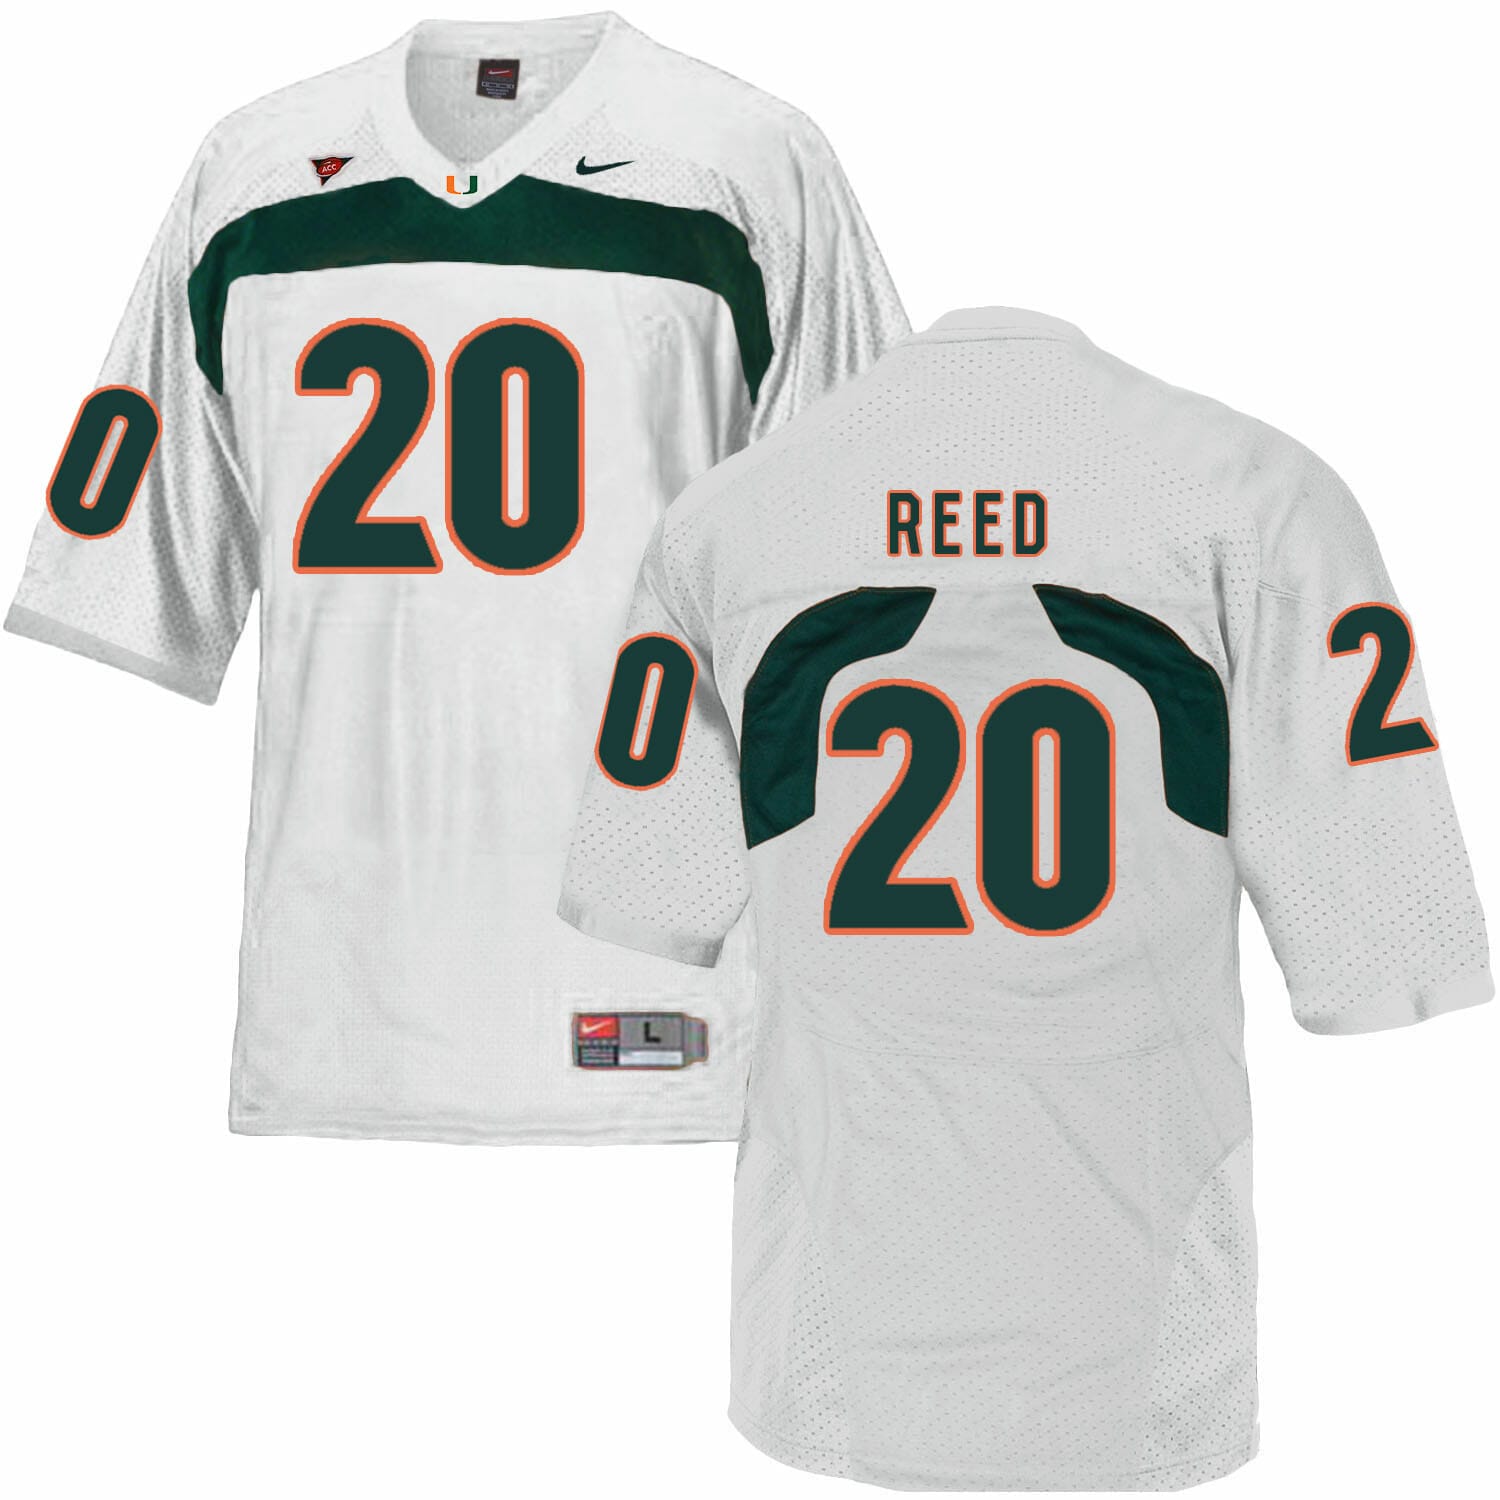 Ed Reed Miami Hurricanes #20 Football Jersey - White